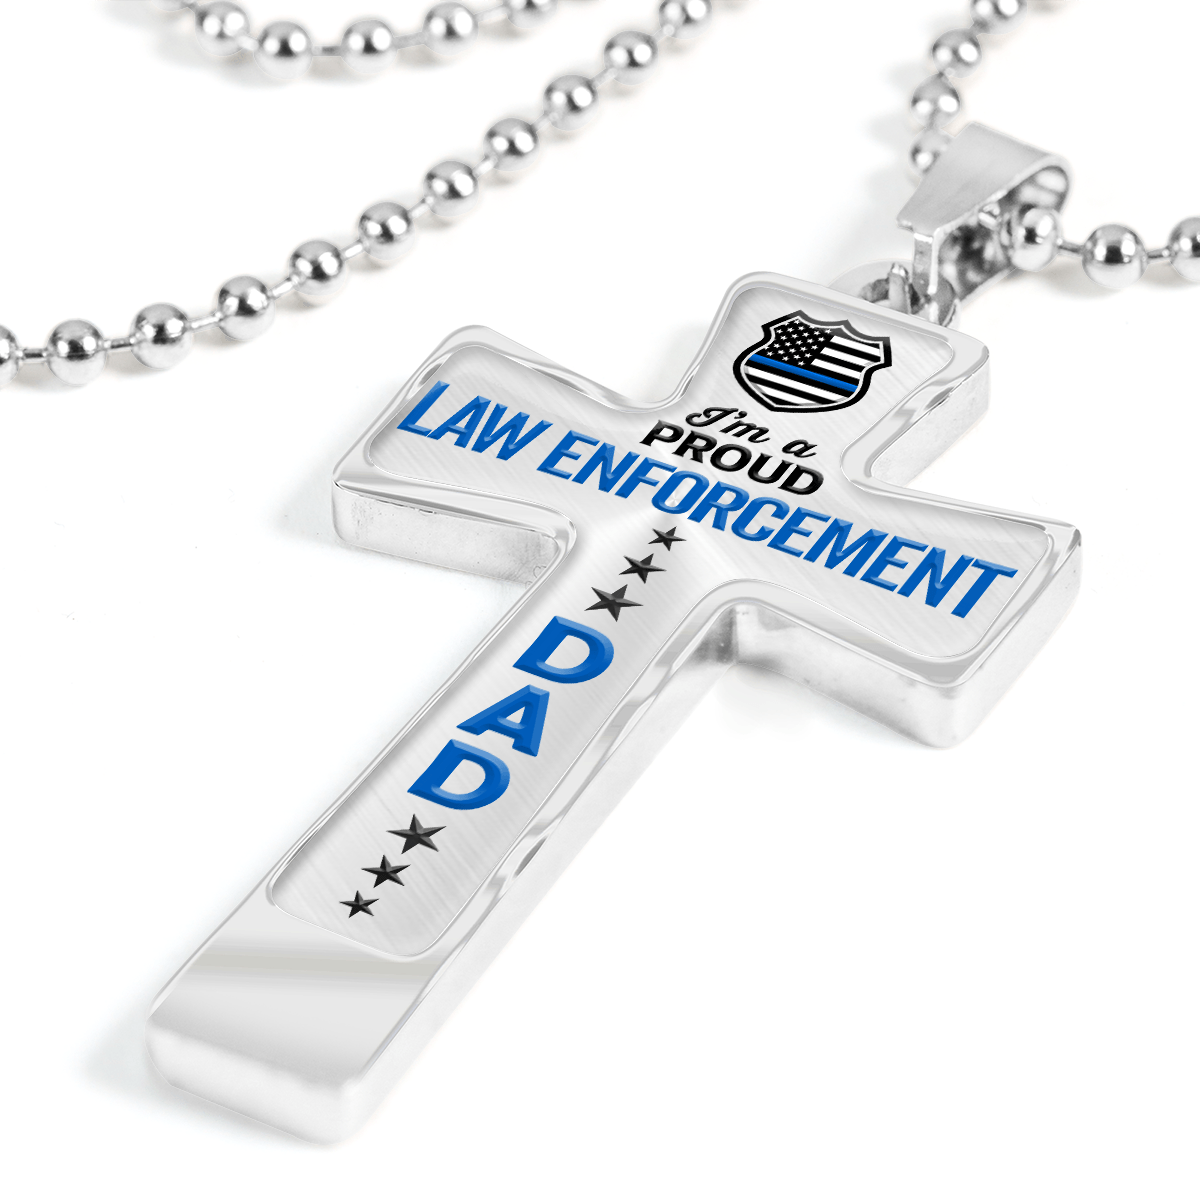 Proud Law Enforcement Dad Cross Necklace - Heroic Defender